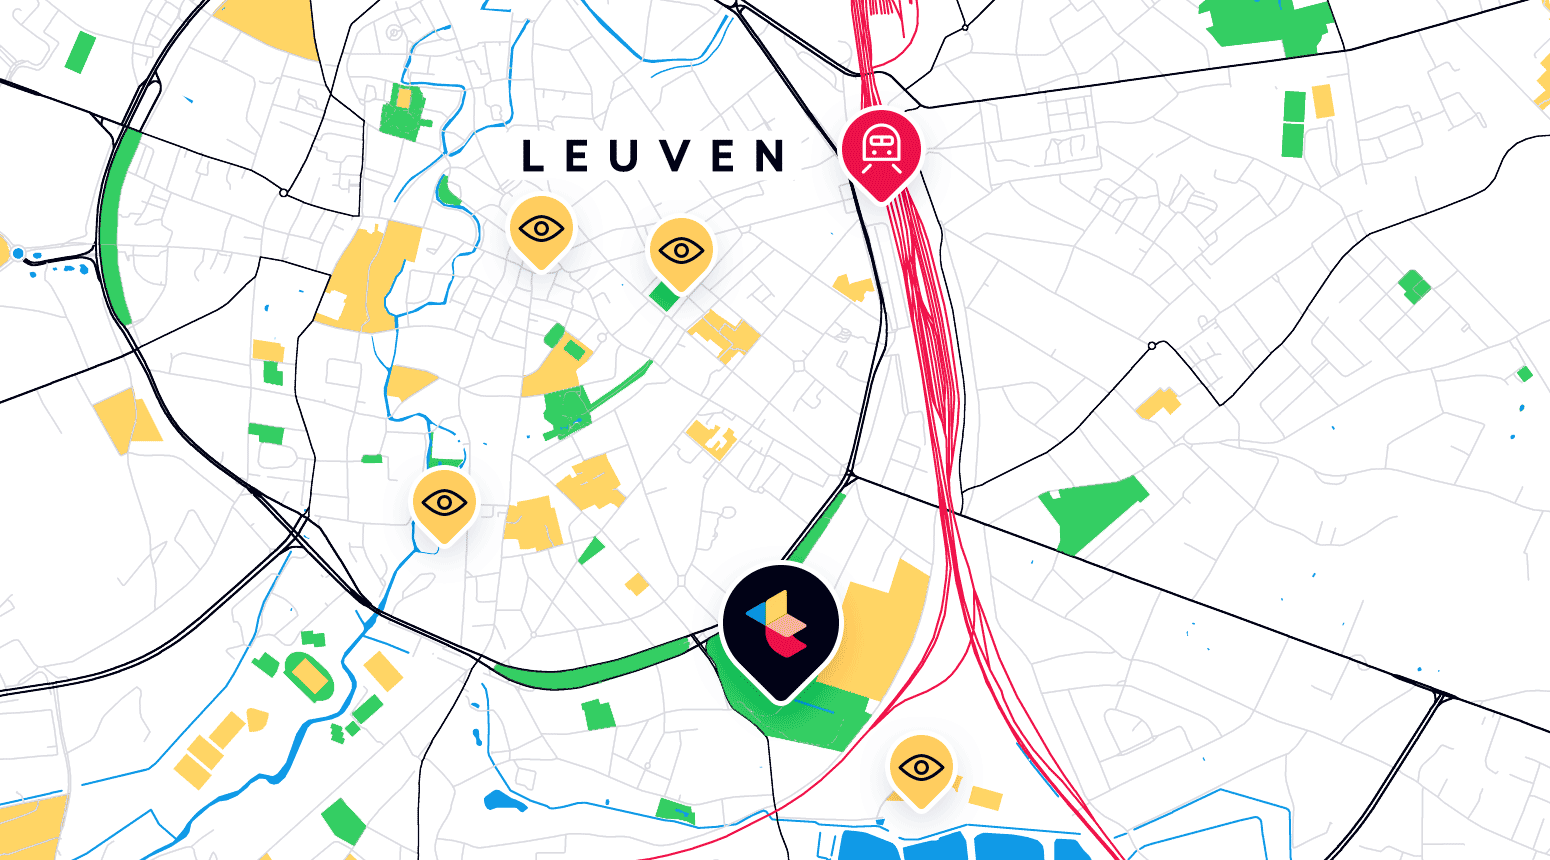 A city map of Leuven